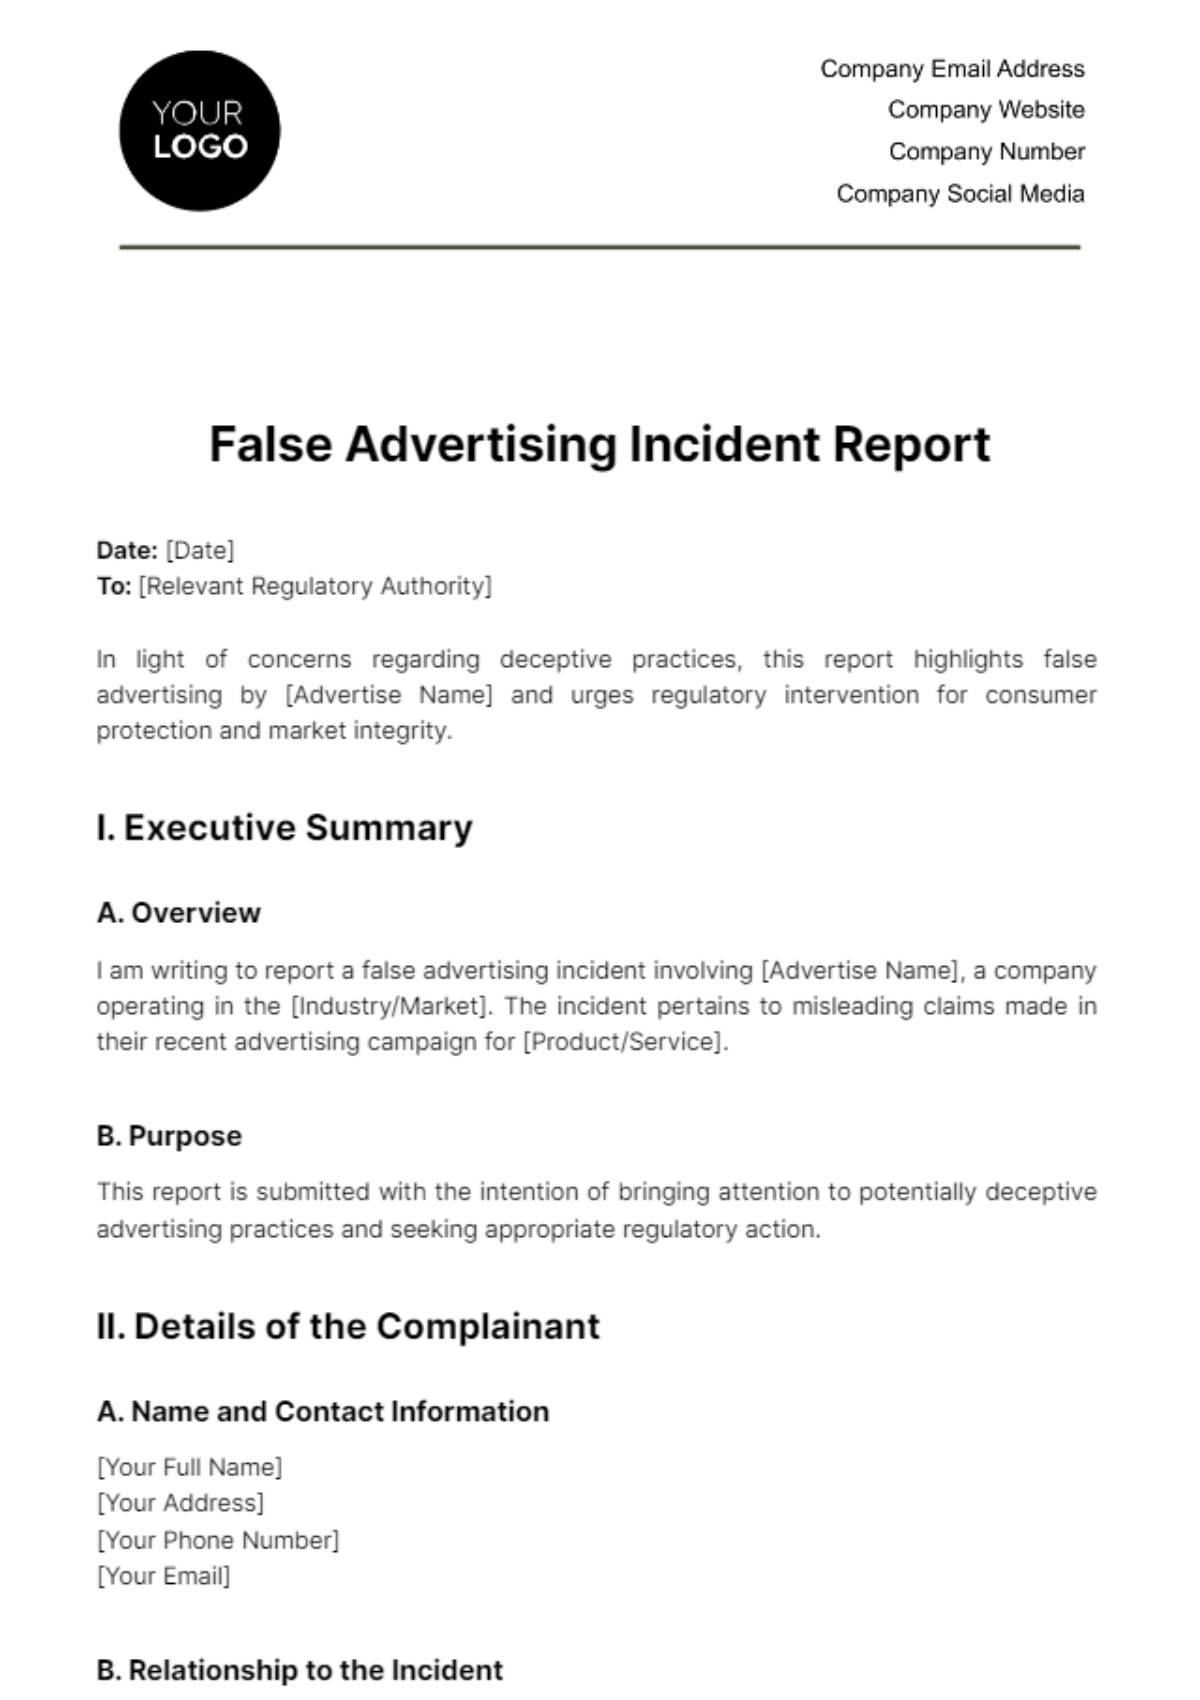 False Advertising Incident Report Template